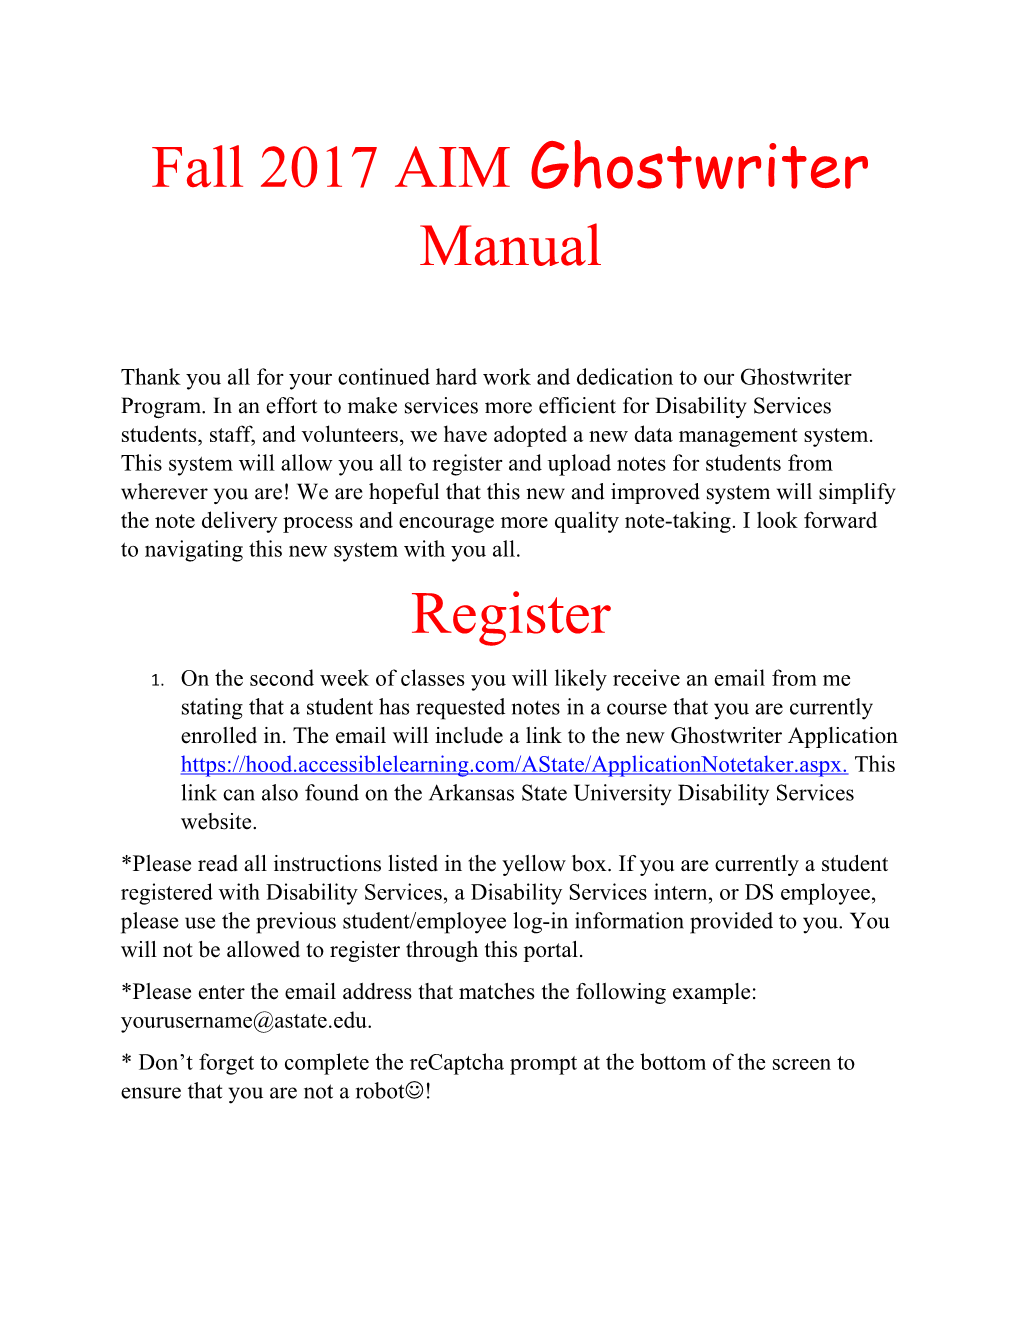 Fall 2017 AIM Ghostwriter Manual